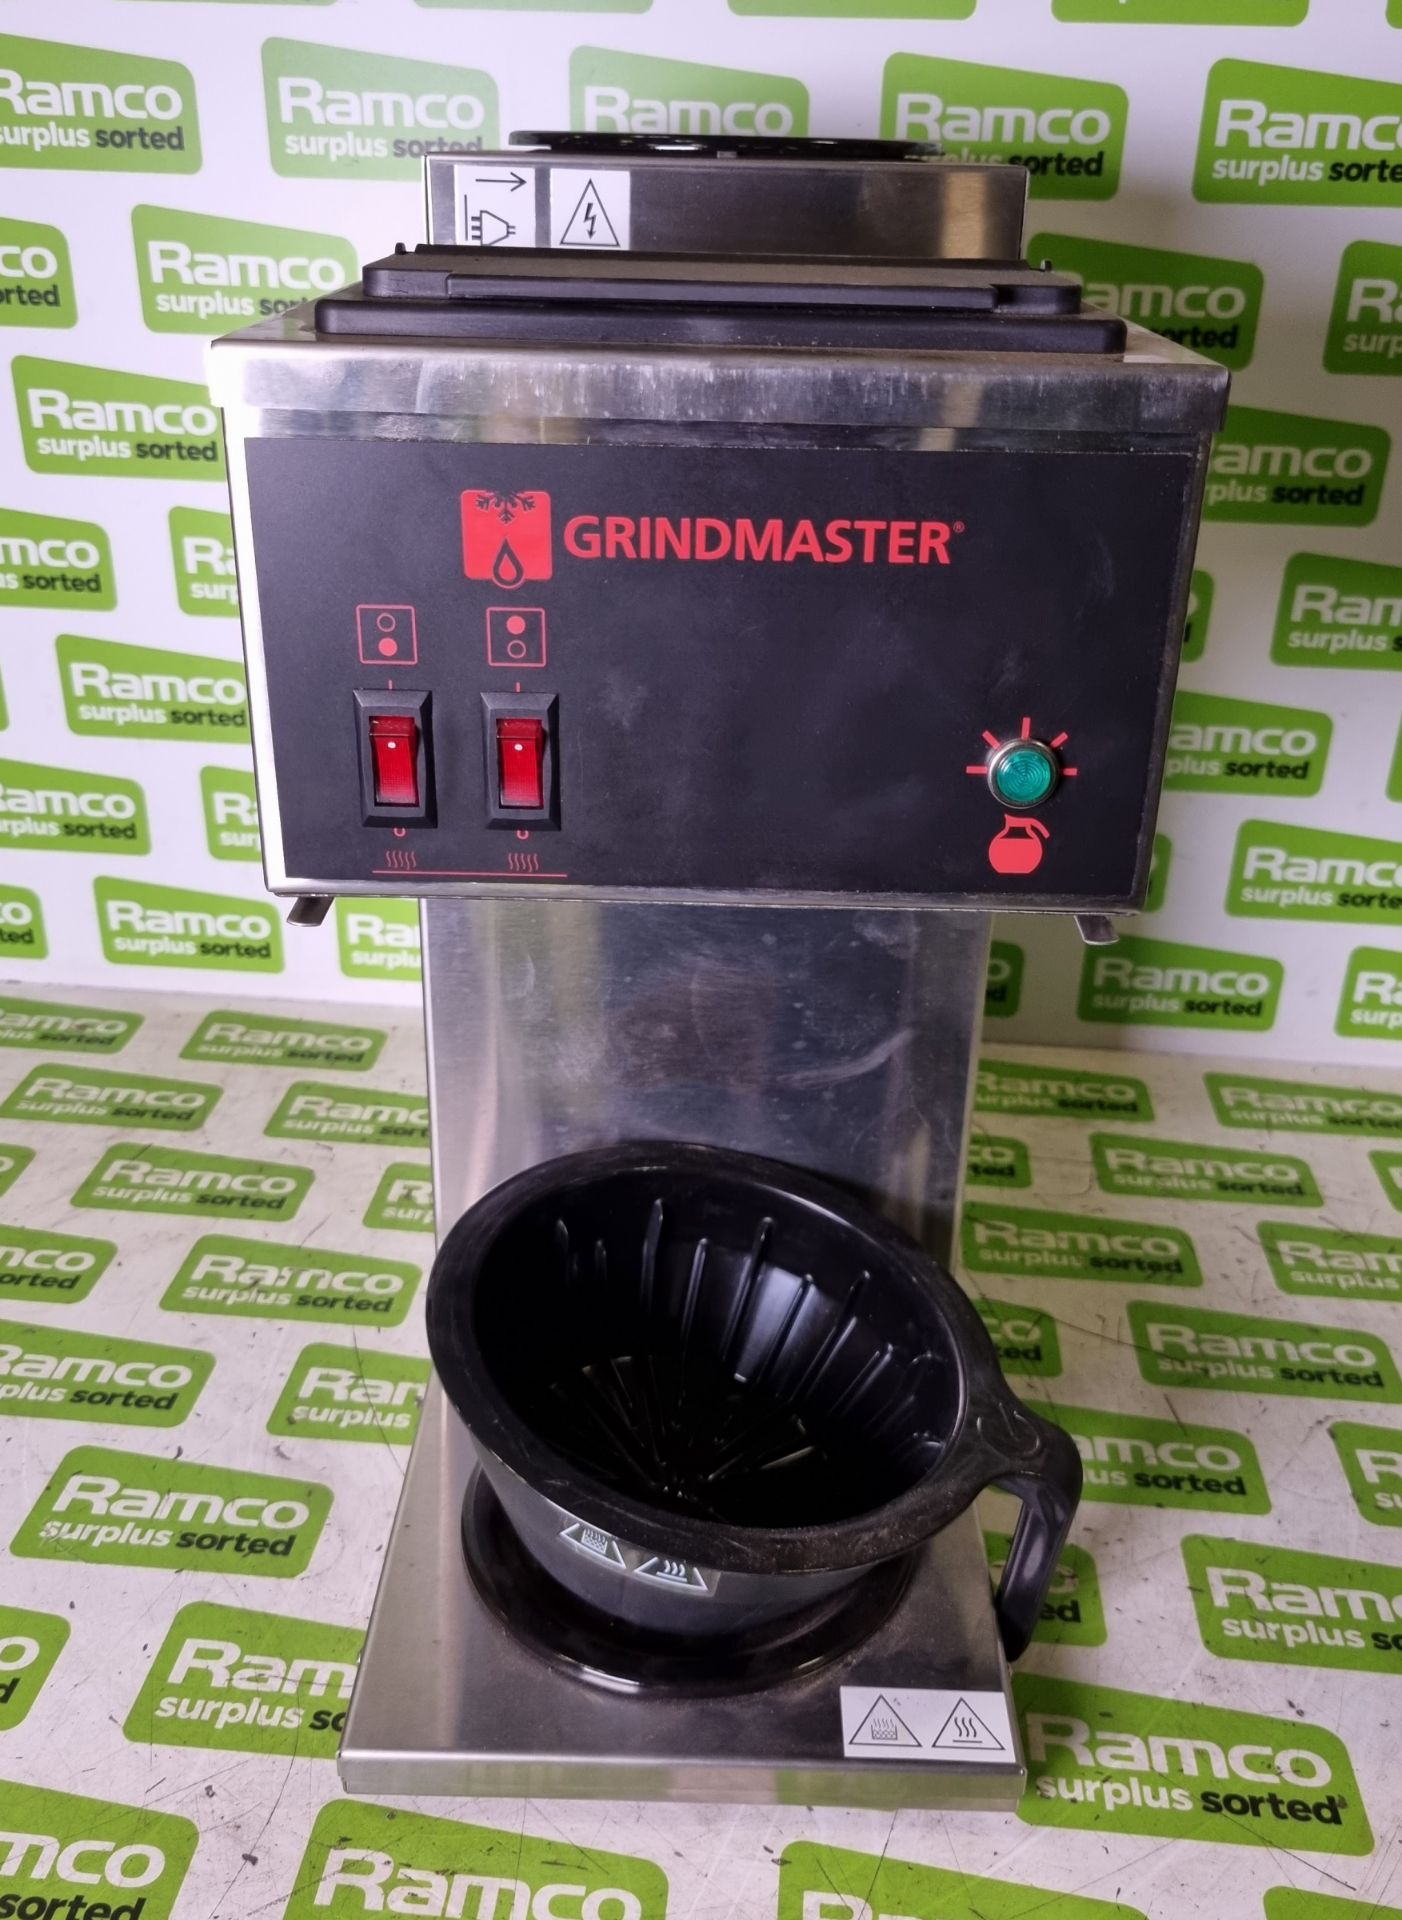 Grindmaster fresh coffee machine - Image 2 of 5